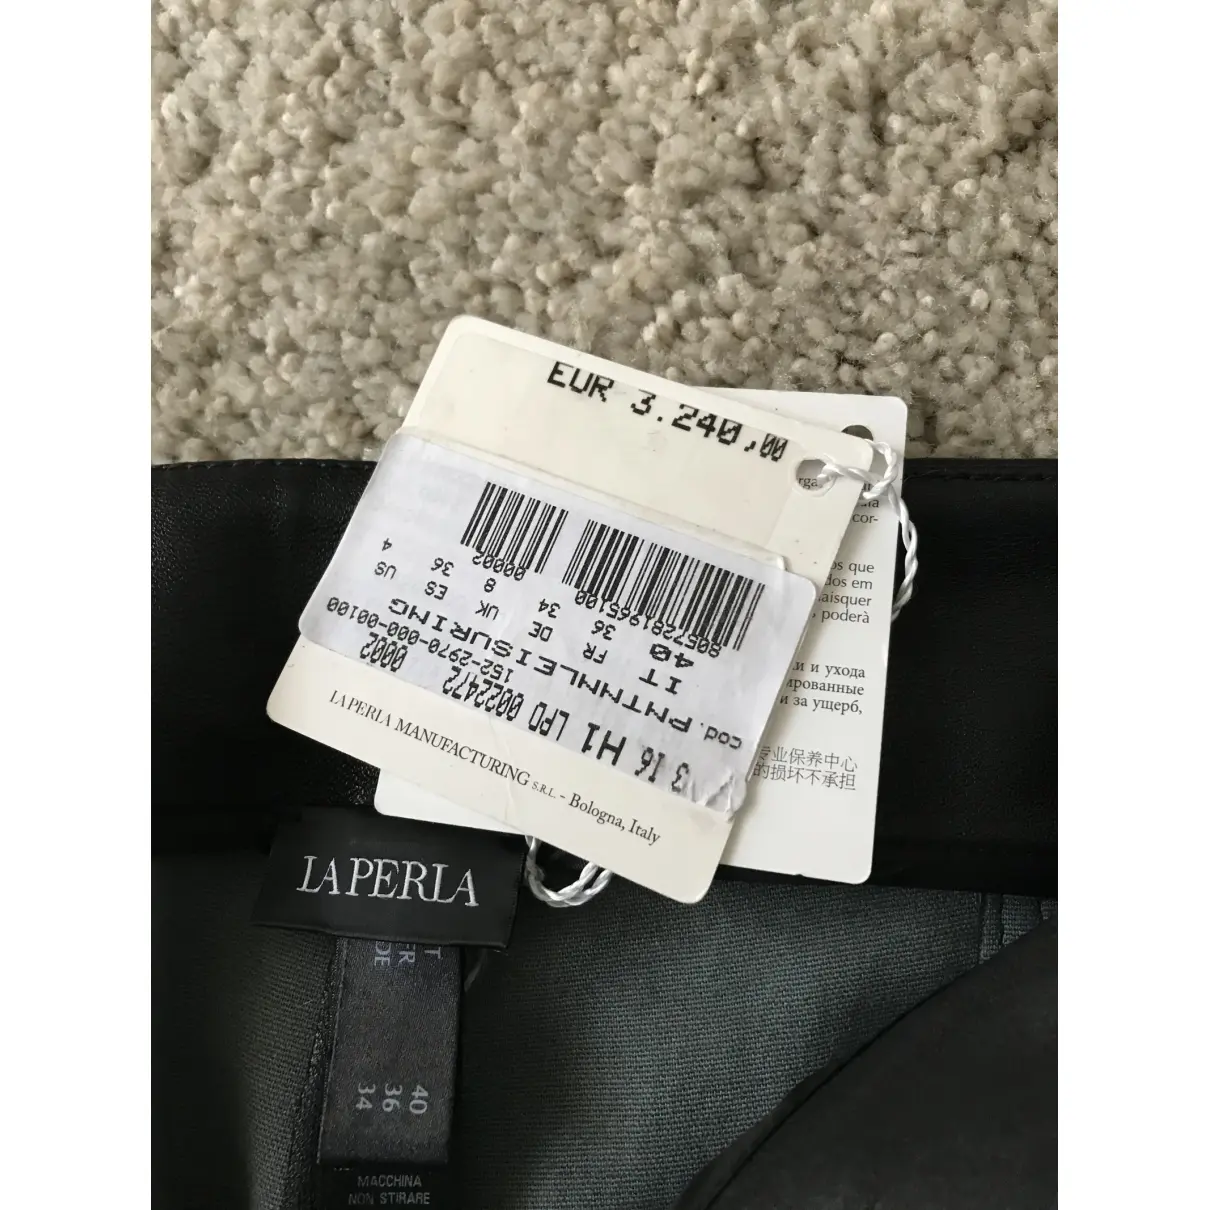 La Perla Leather leggings for sale